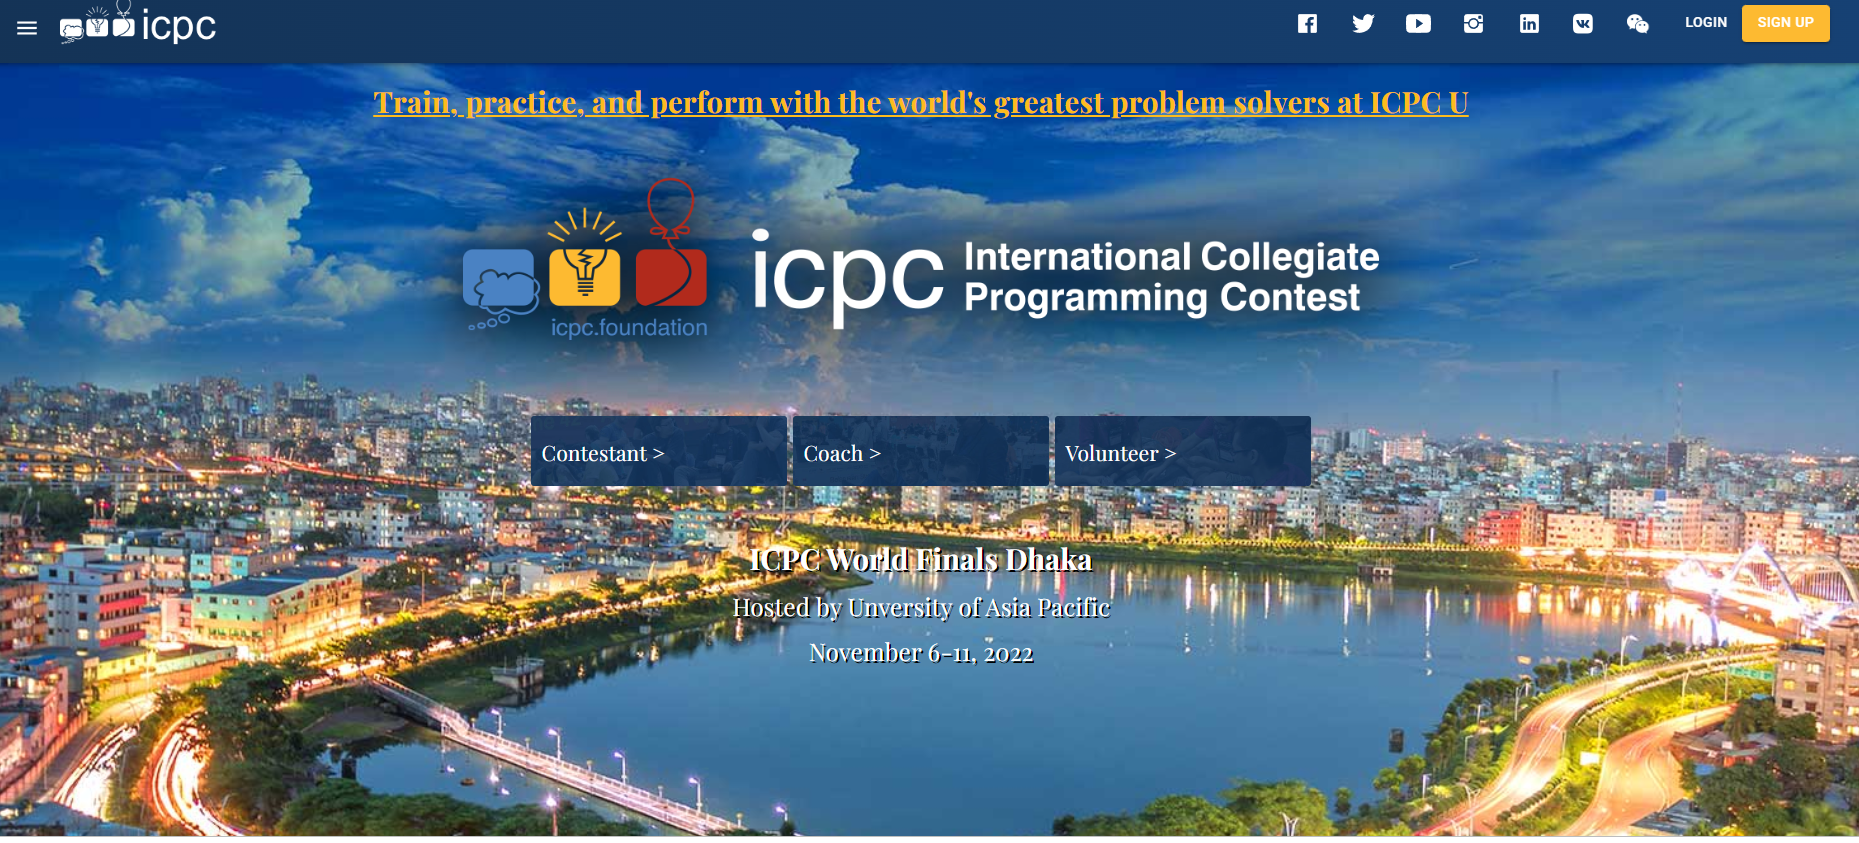 ICPC banner image